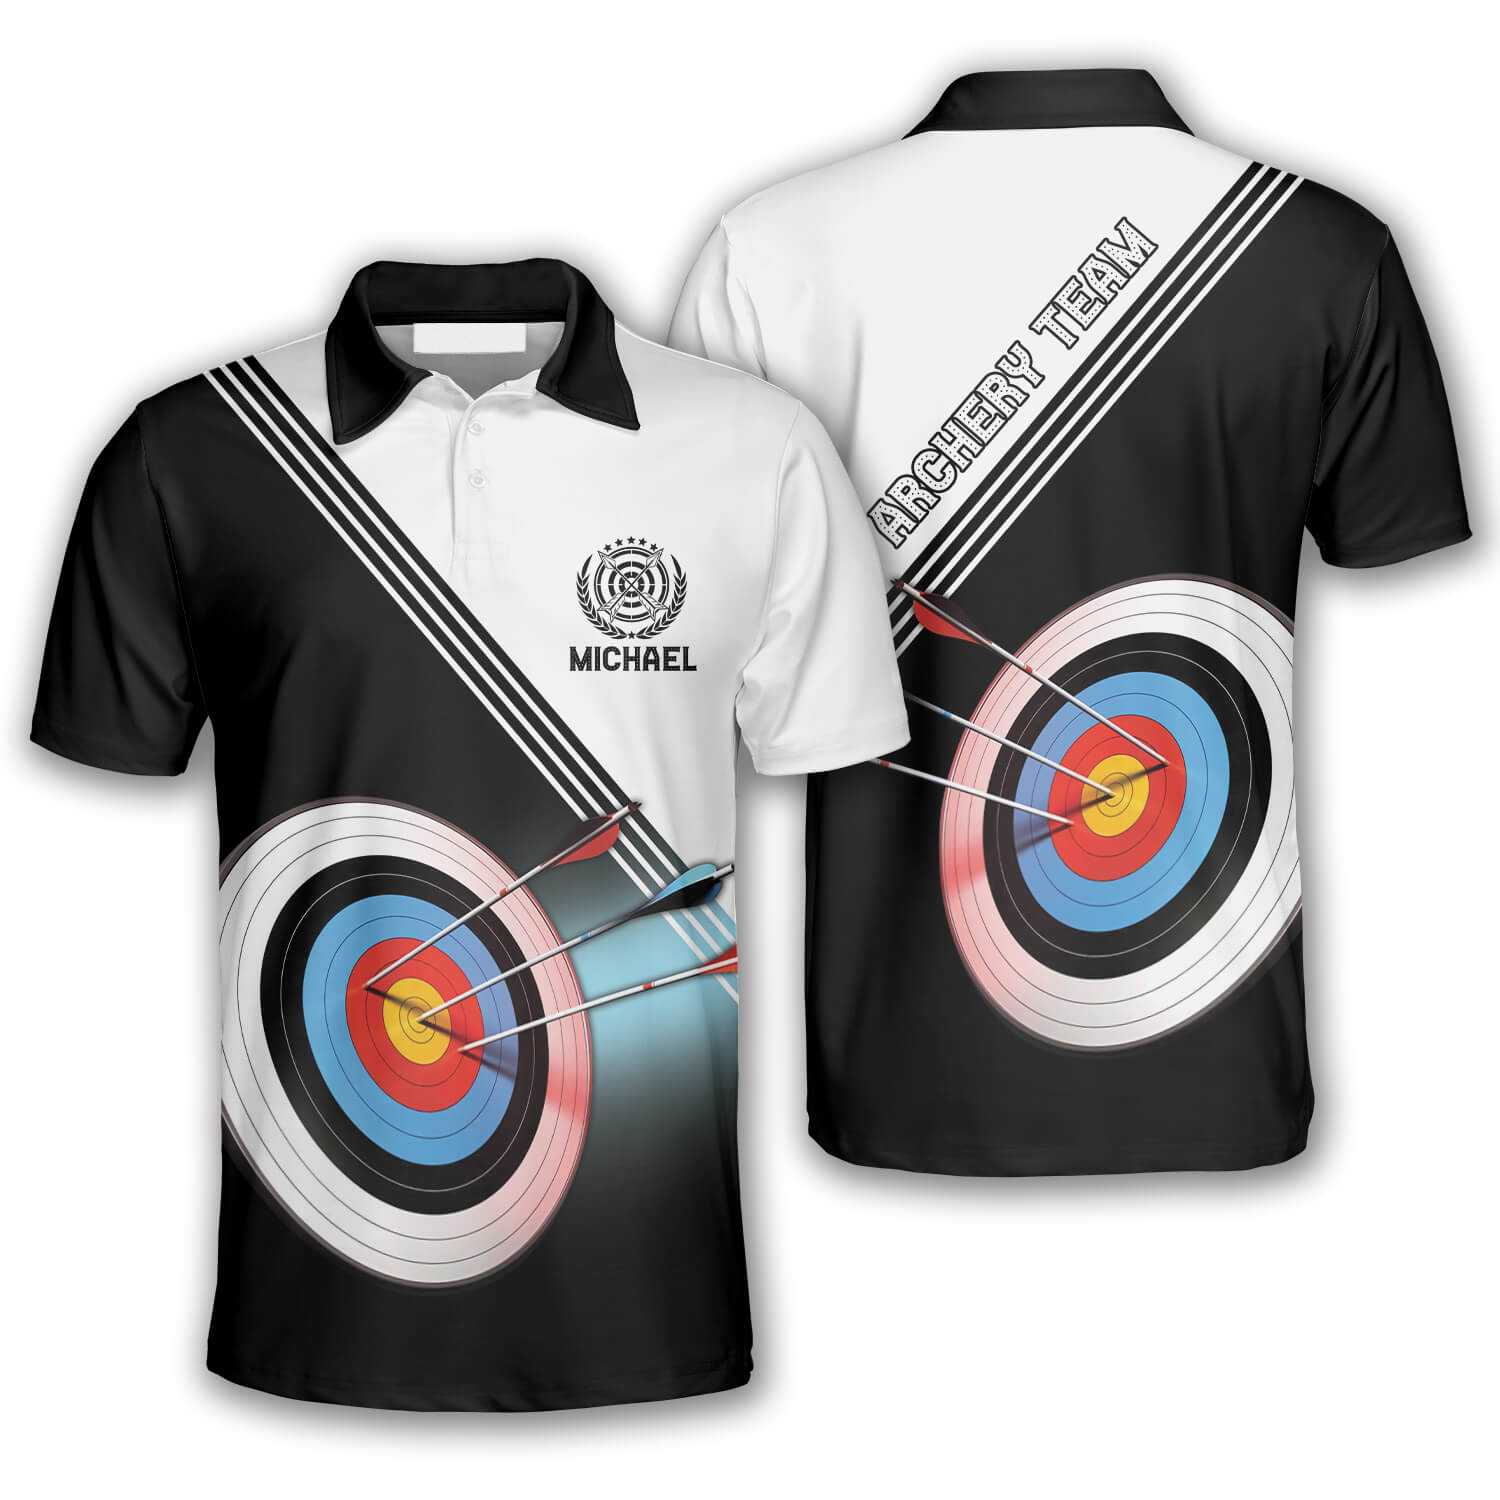 Archery Practice Makes Perfect Custom Archery Shirts For Men/ Uniform for Team Archery